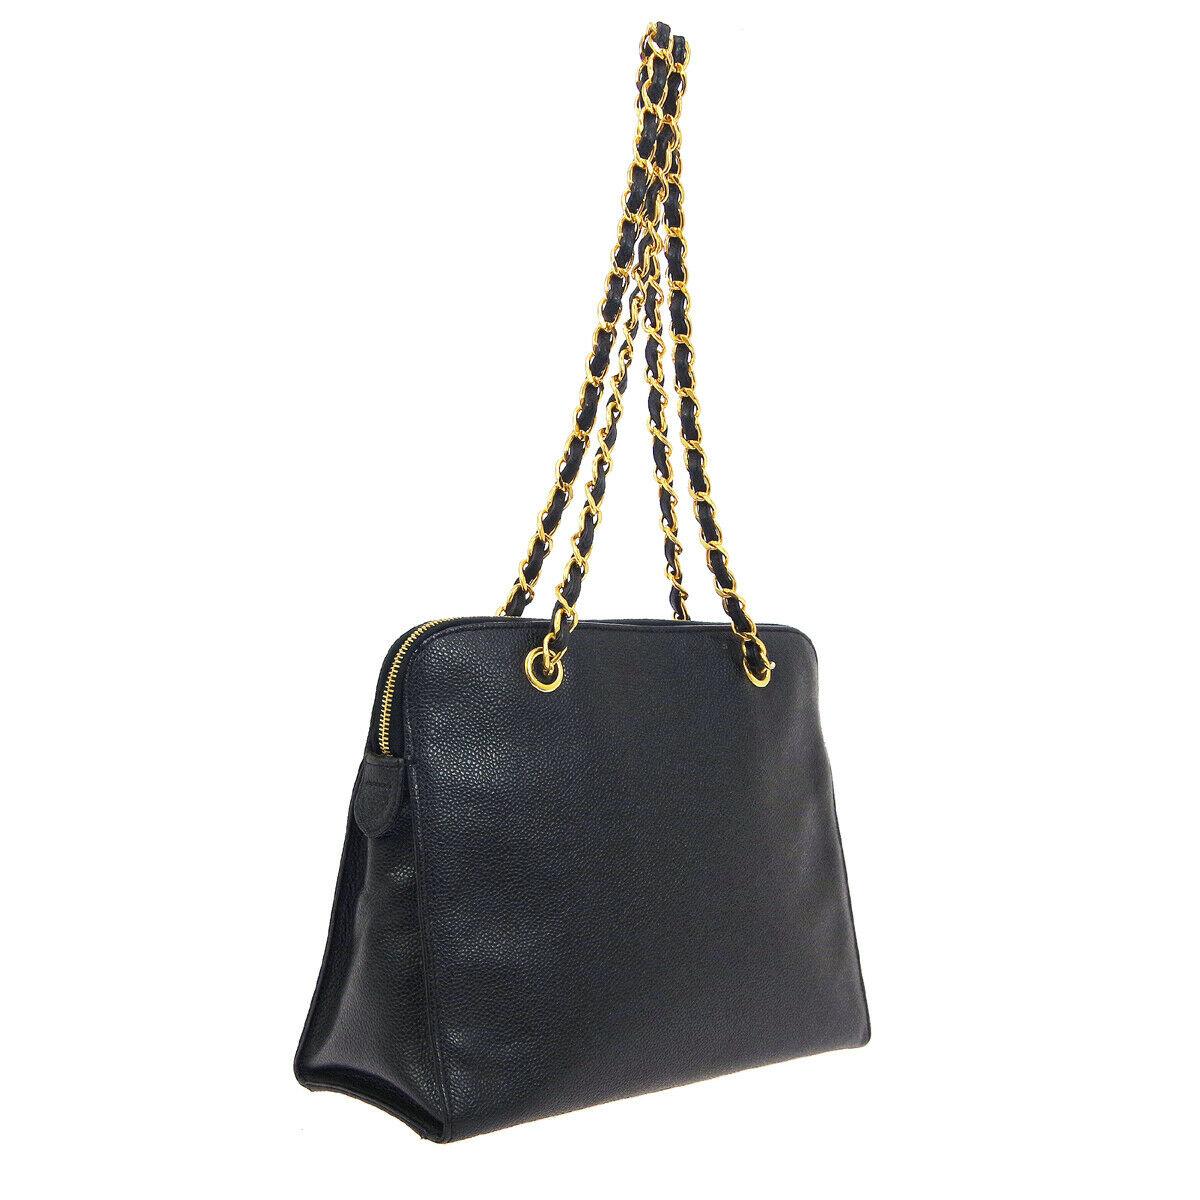 Women's Chanel Black Leather Gold Chain Medium Carryall Shopper Tote Shoulder Bag